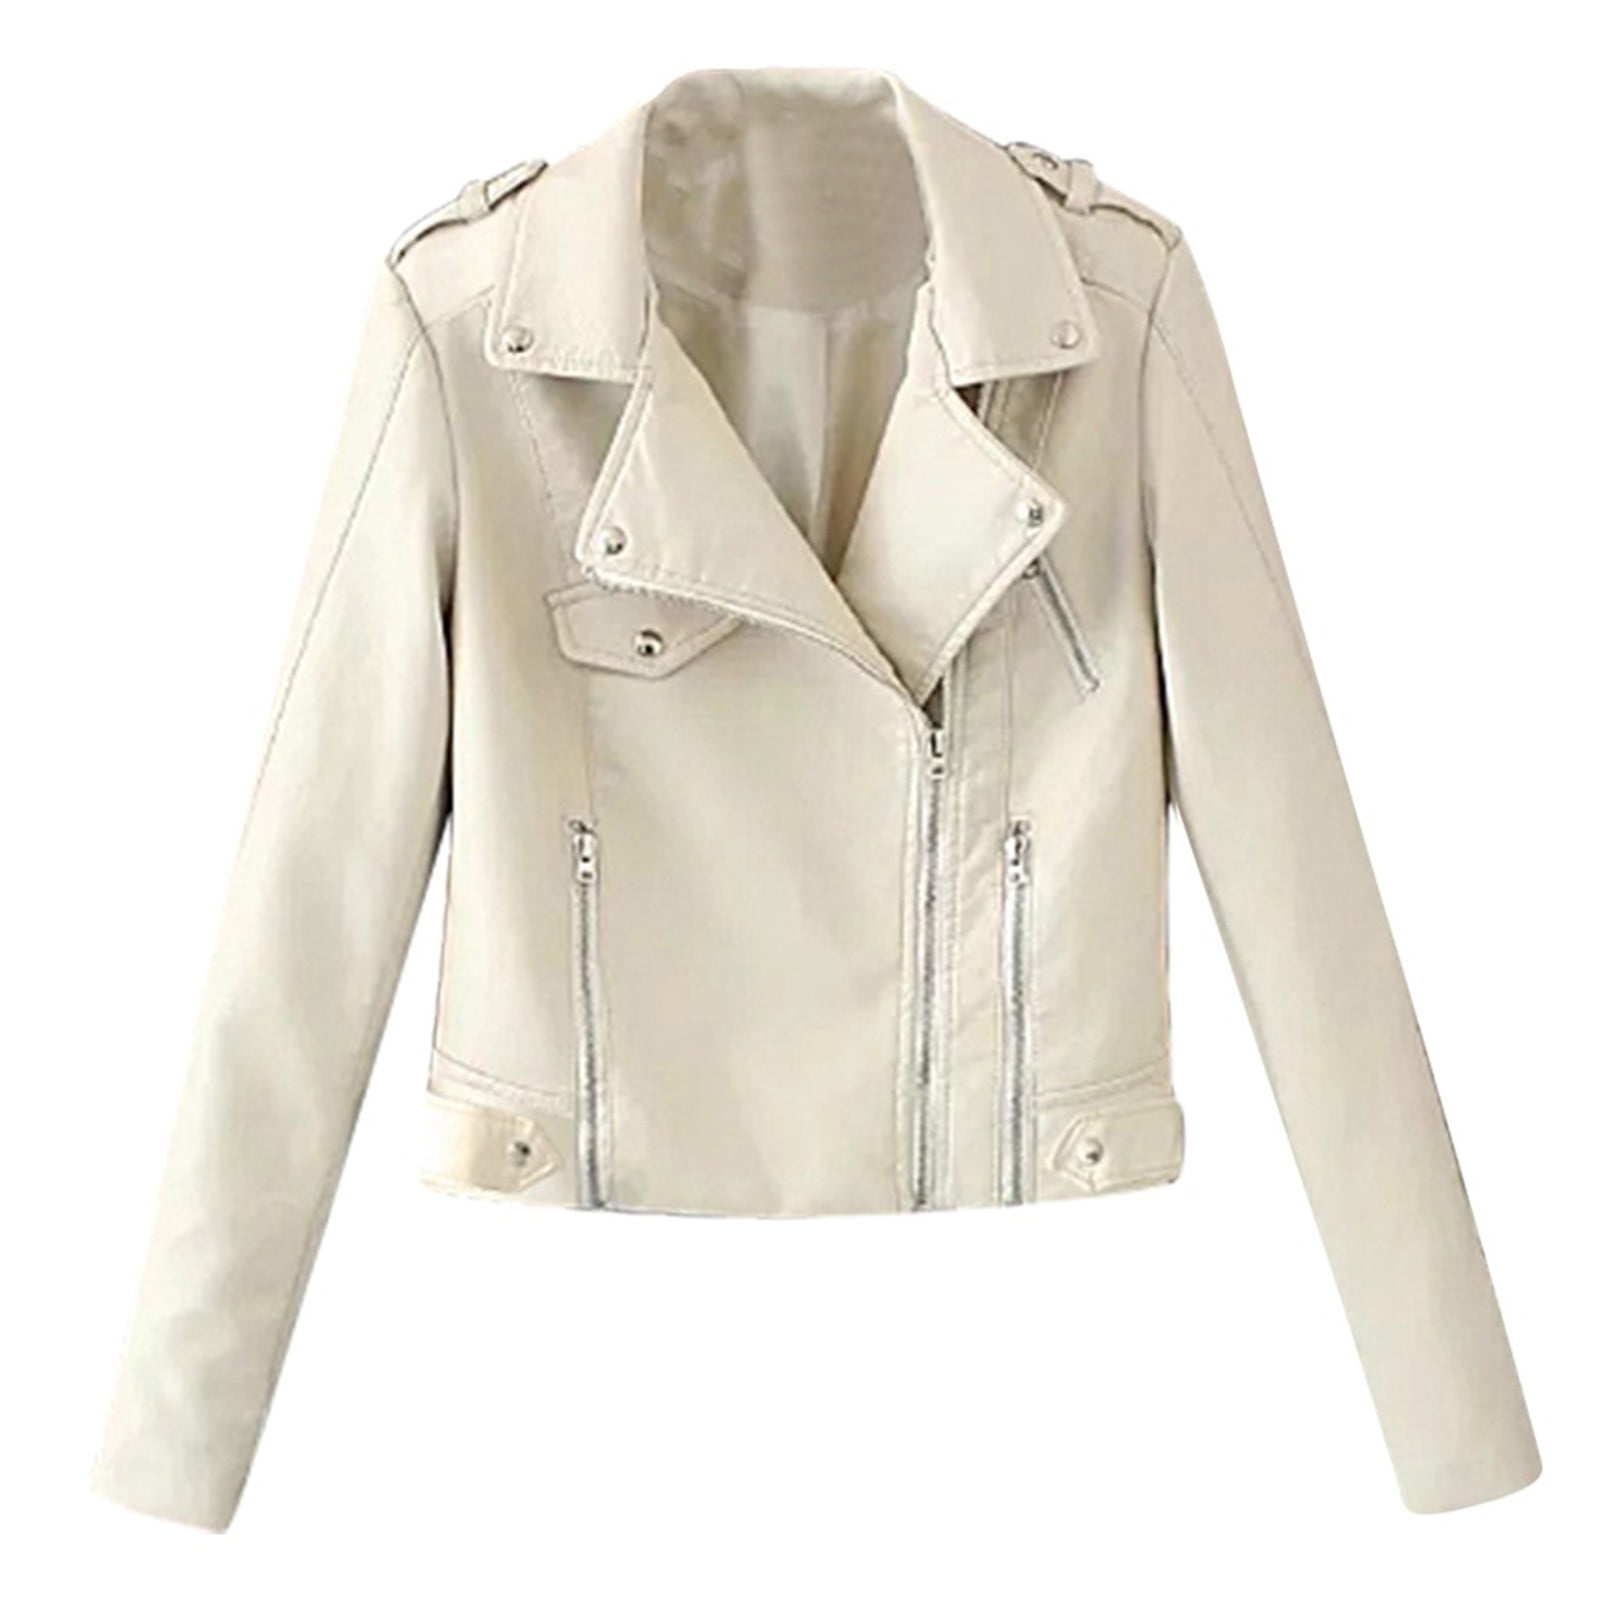 Hfyihgf Women's Fashion Faux Leather Jackets Lightweight Classical Solid Color Long Sleeve Lapel Zip Up Slim Short Biker Coats(White,L), Size: Large